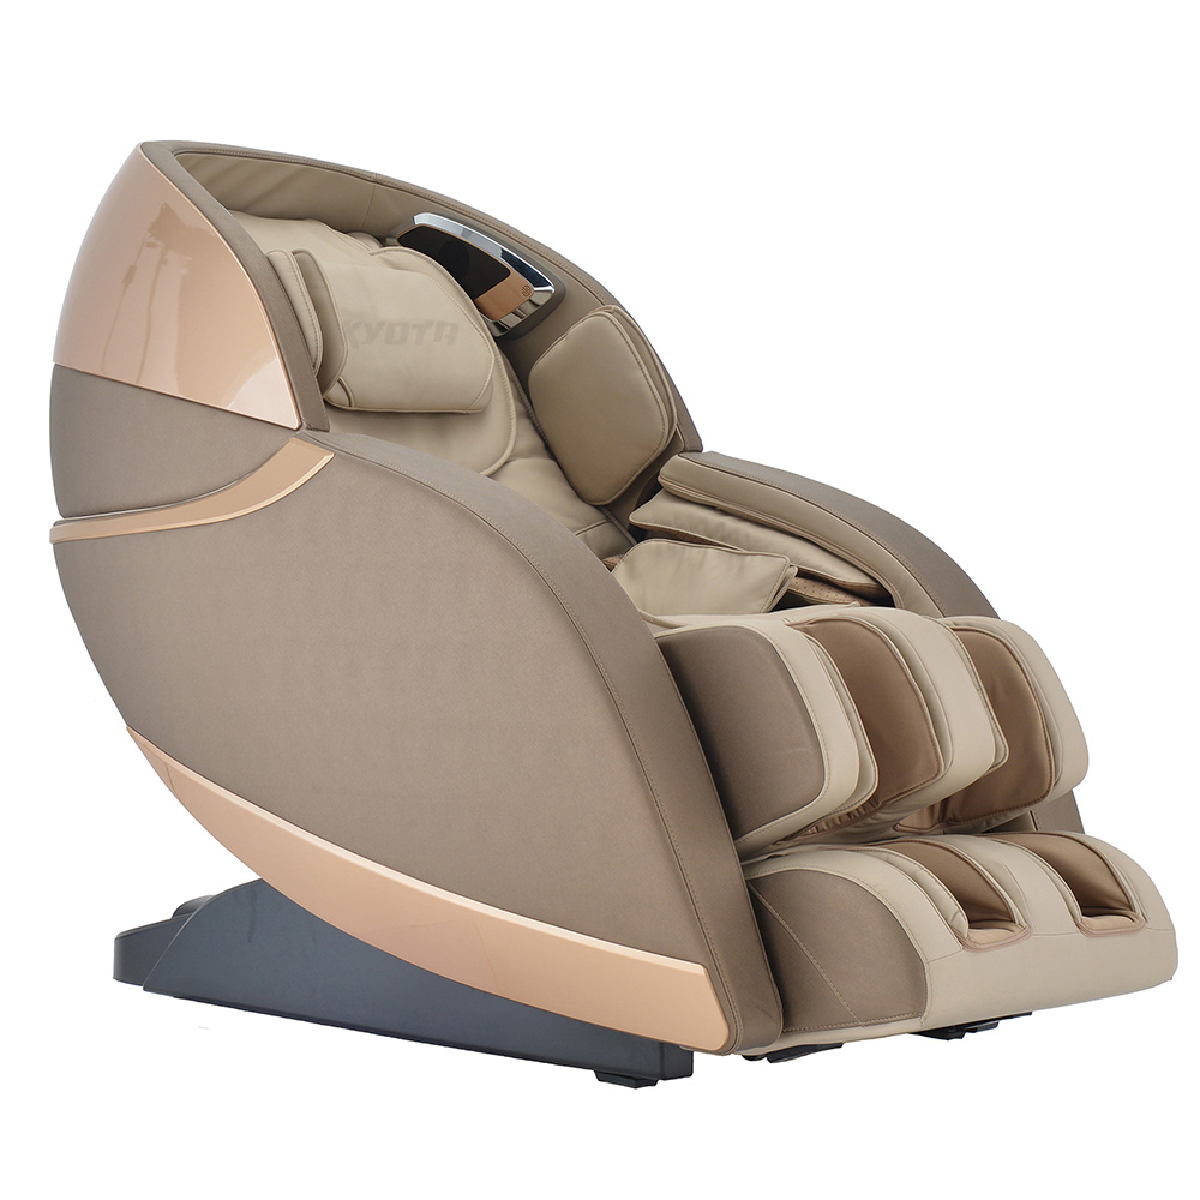 Kyota Kansha 4D Massage Chair M878 in Tan - Home Bars USA